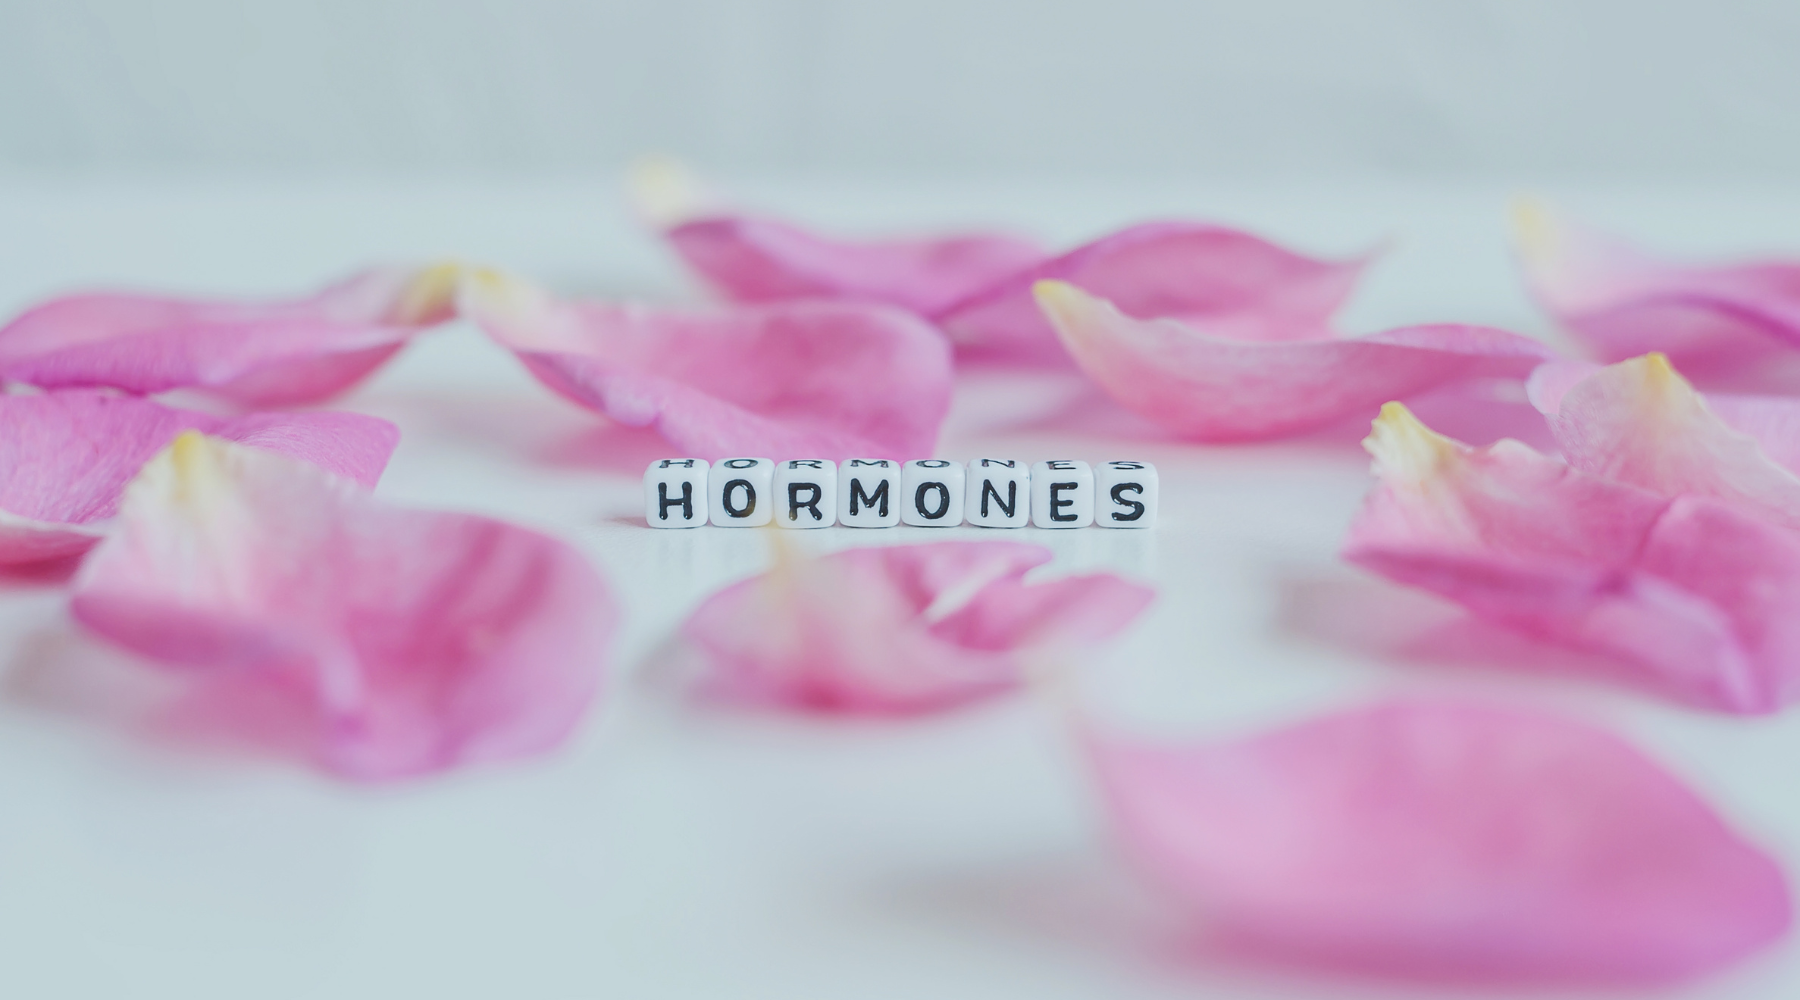 hormones amongst rose pedals